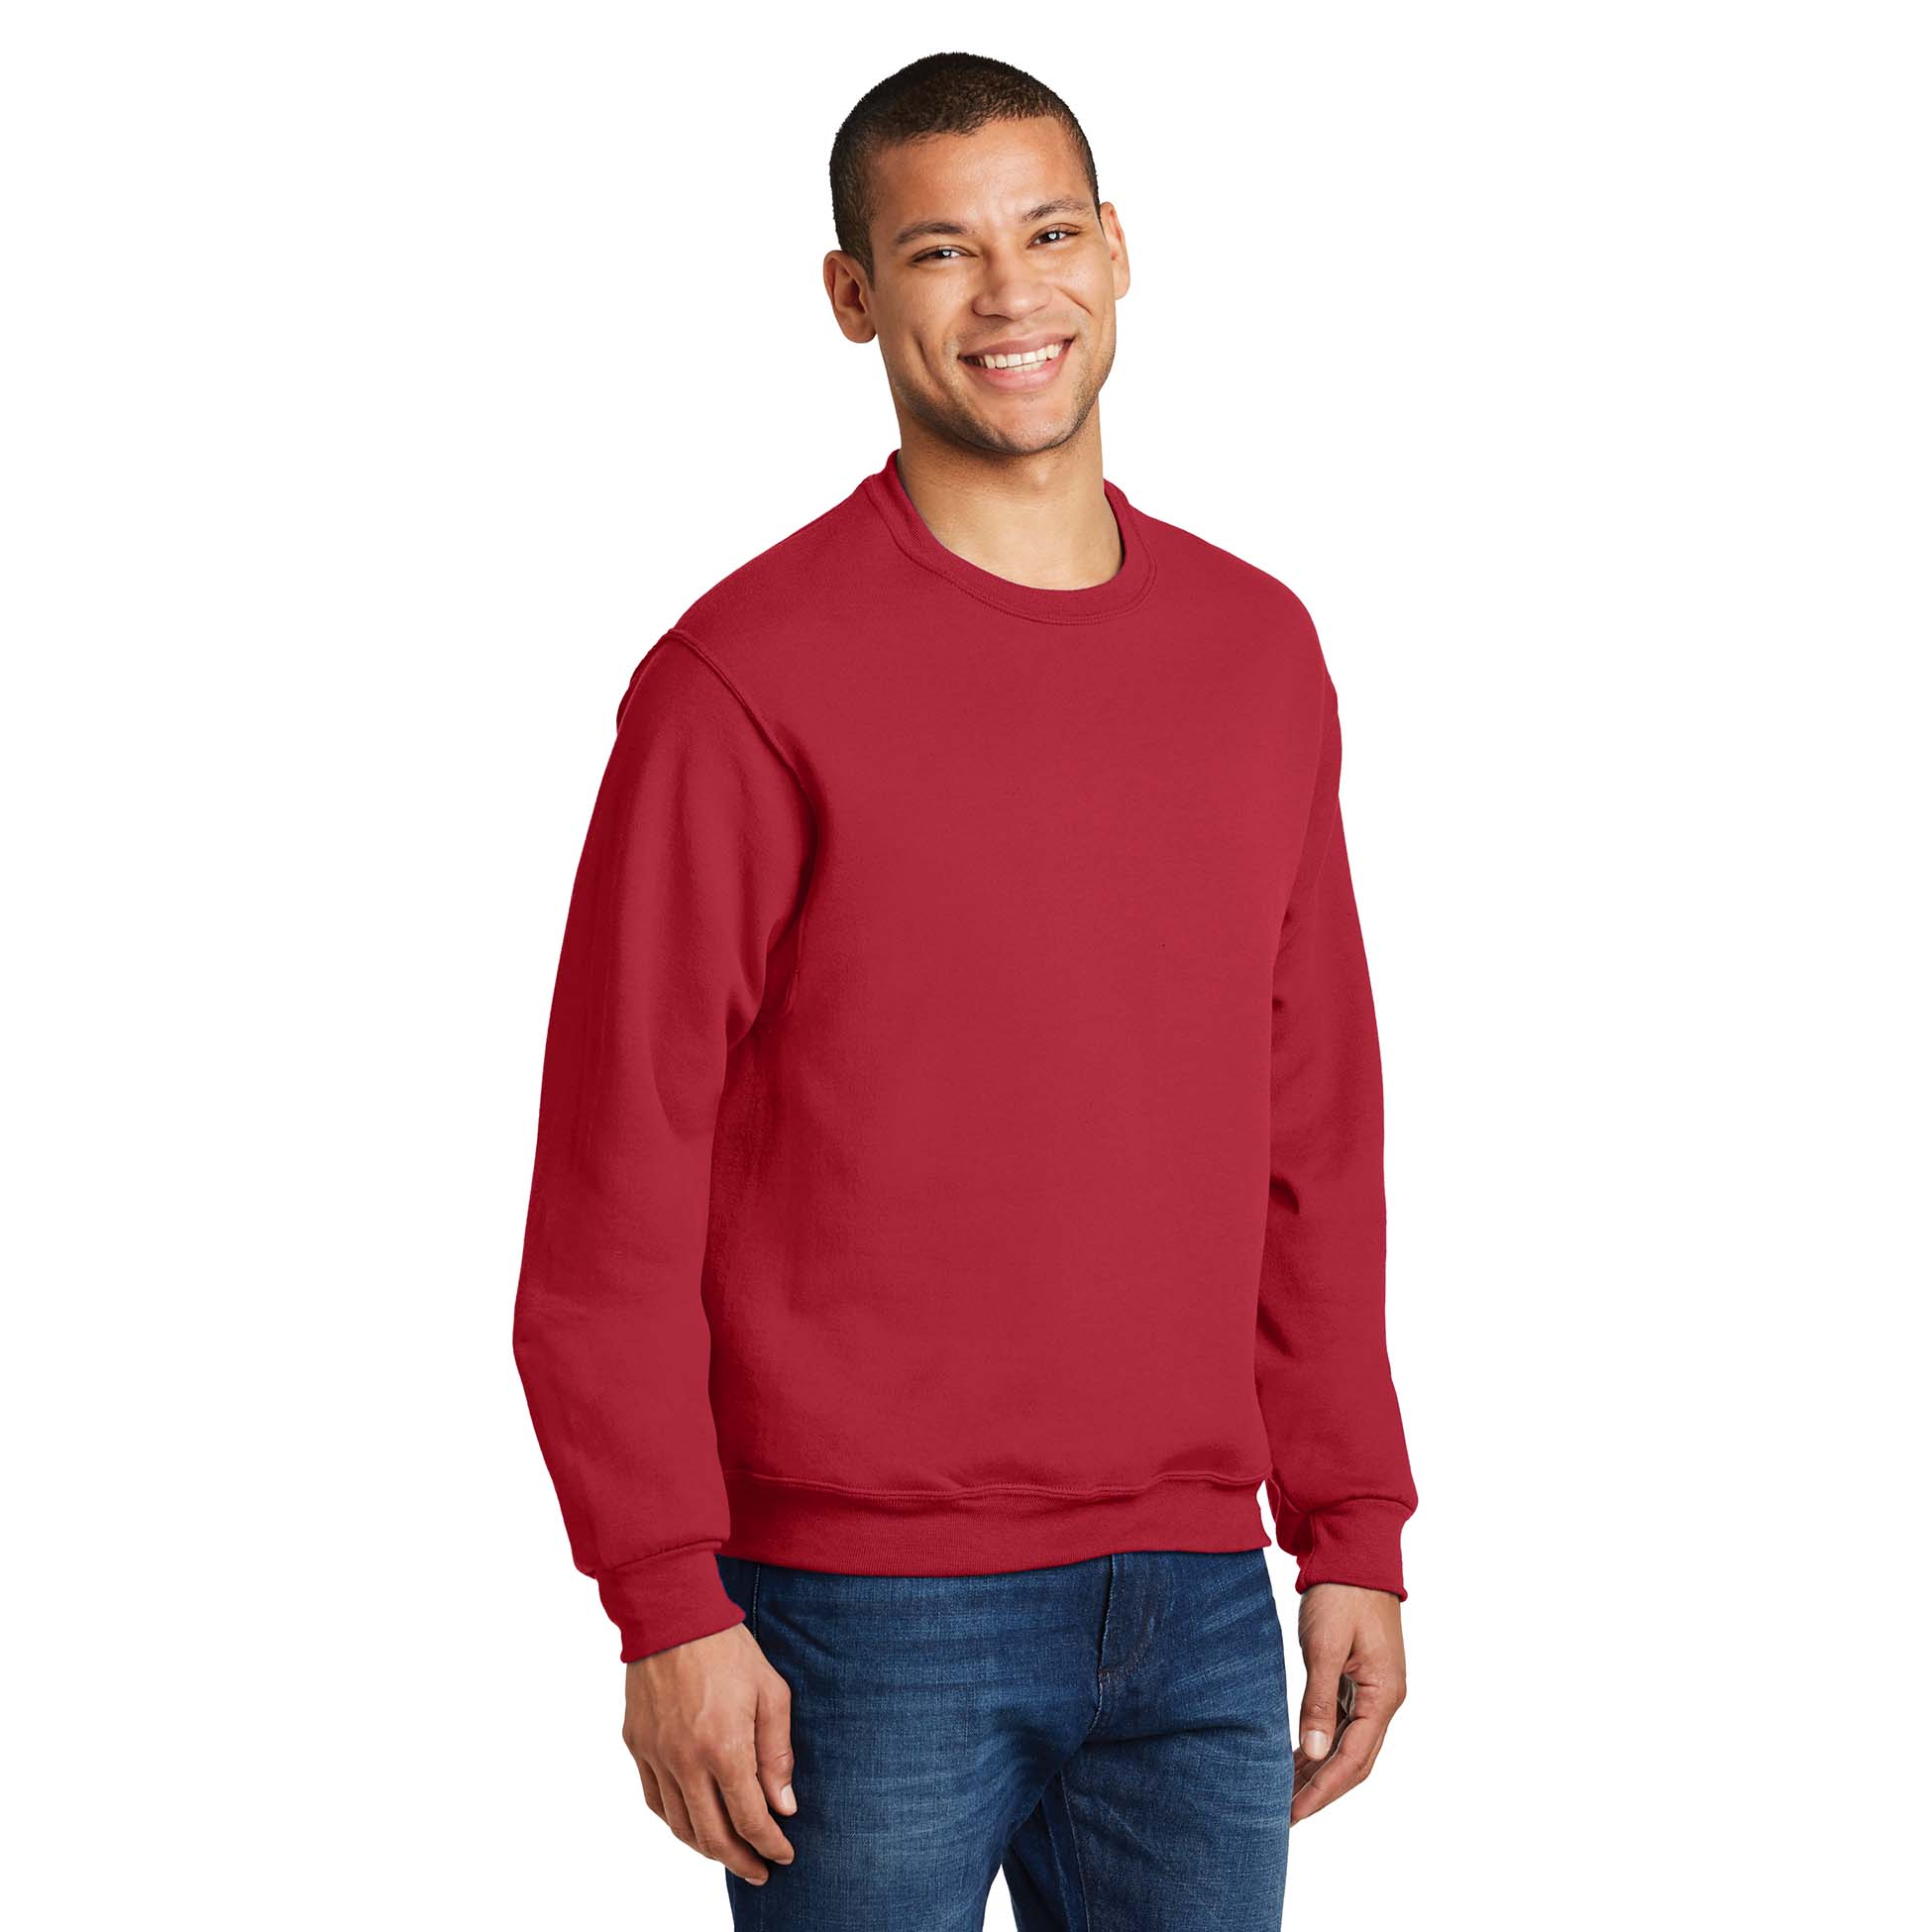 Jerzees 562M NuBlend Crewneck Sweatshirt - True Red | Full Source